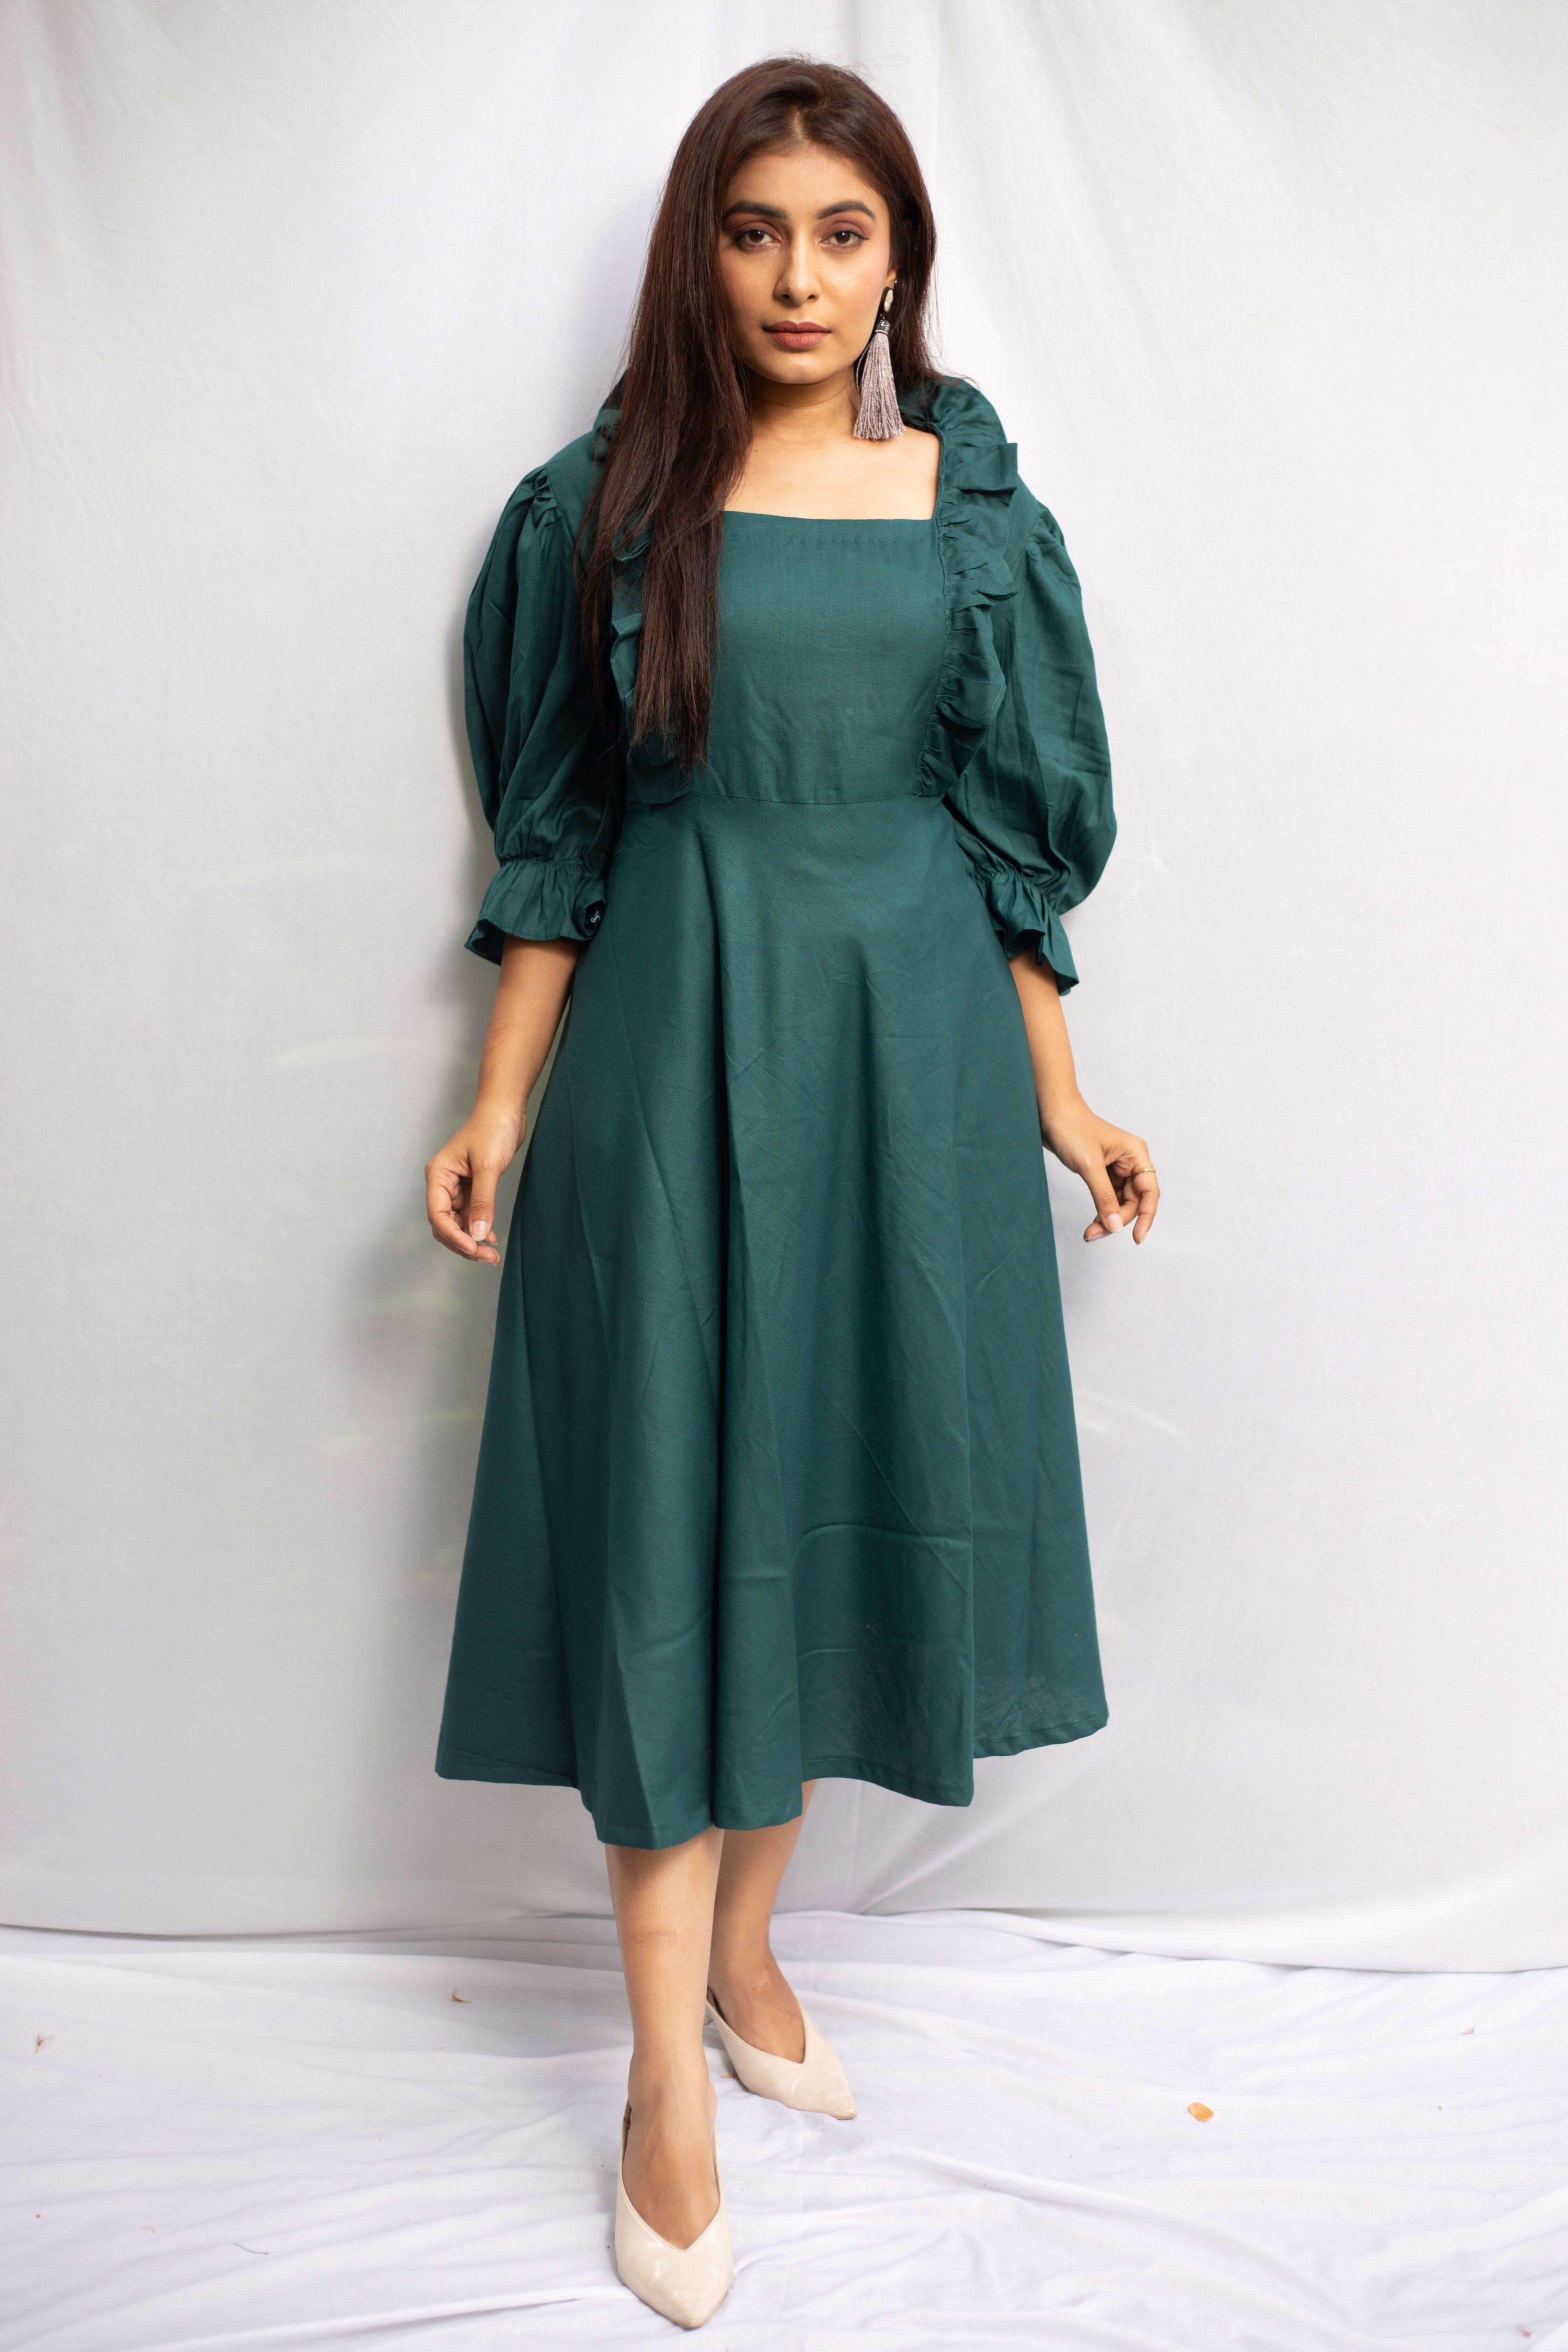 Green Bodycon Dress - One-Shoulder Dress - Ribbed Mini Dress - Lulus